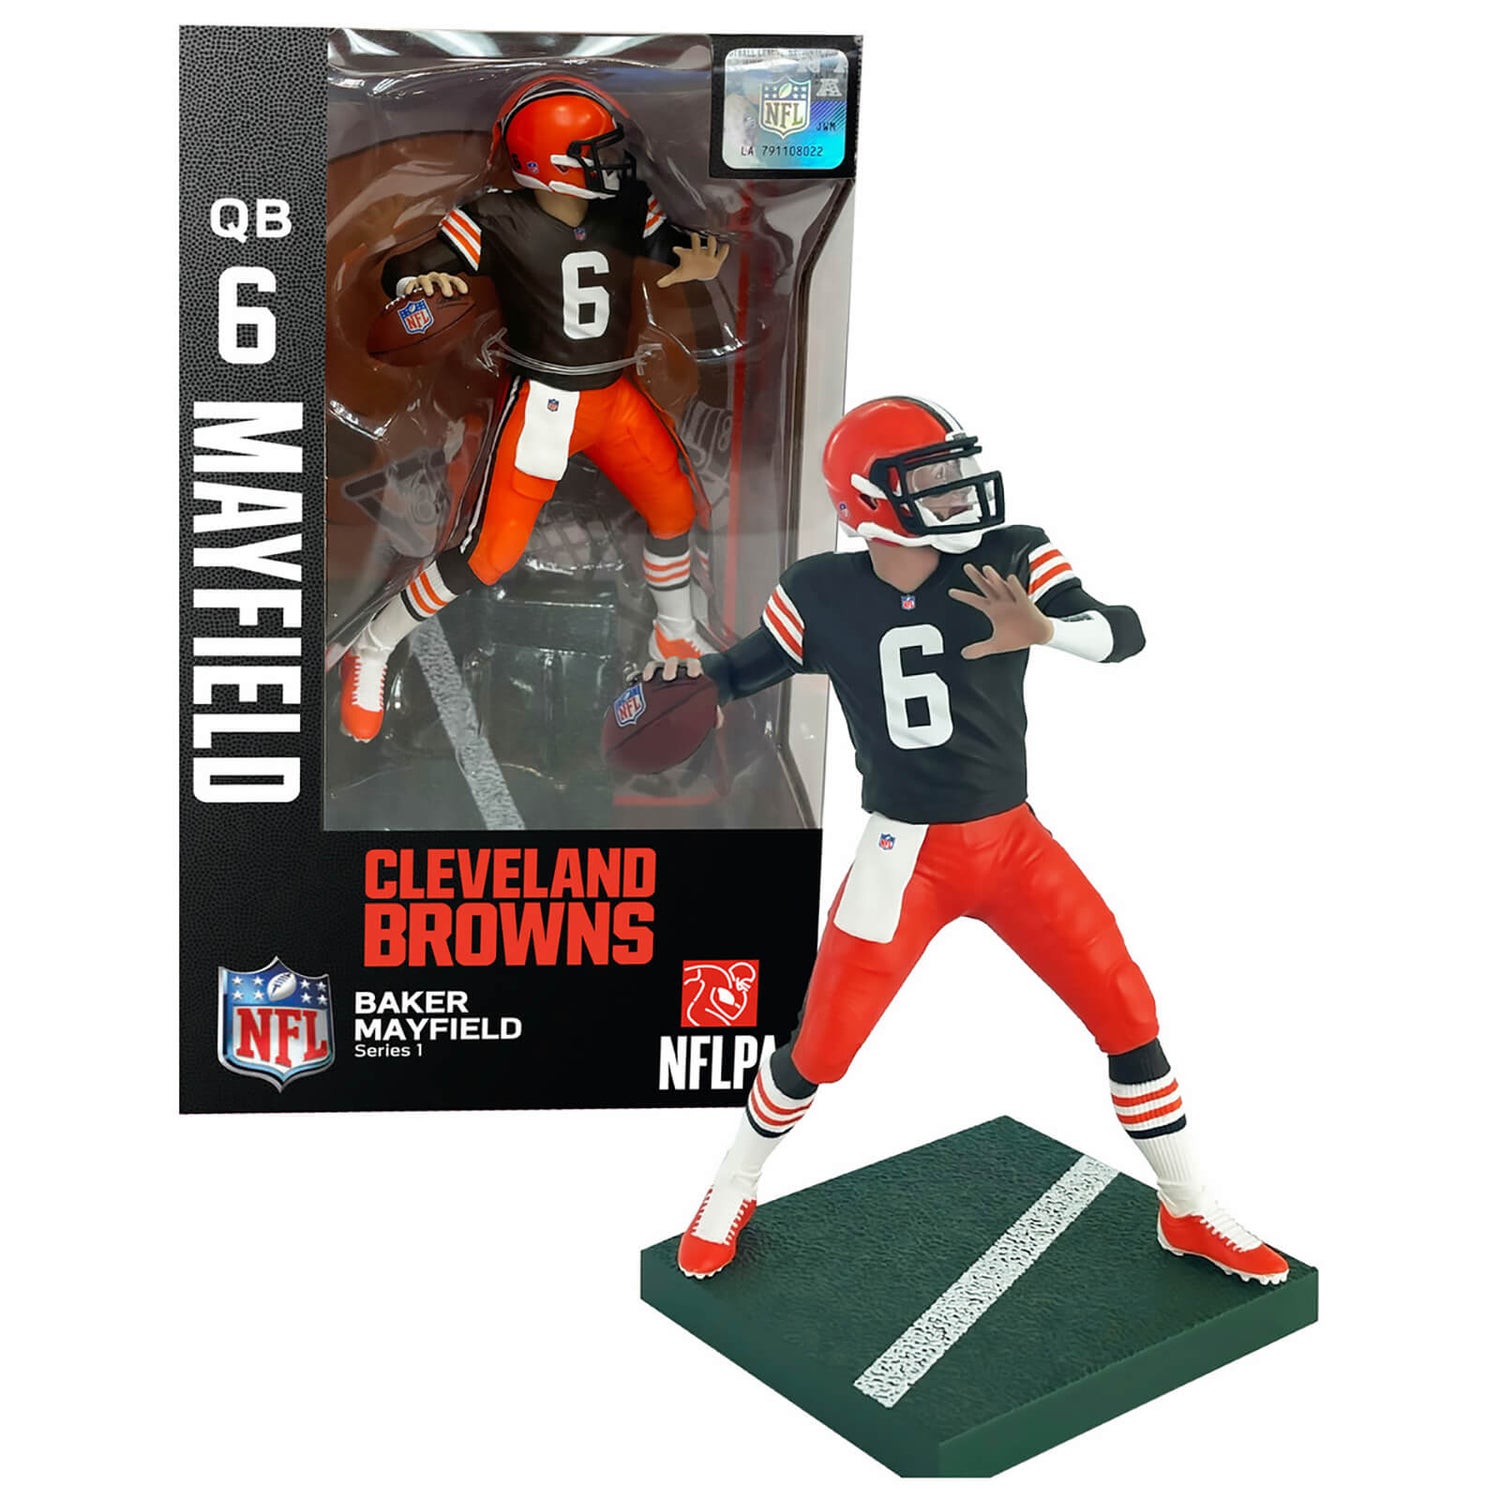 NFL Cleveland Browns 7" Action Figure - Baker Mayfield